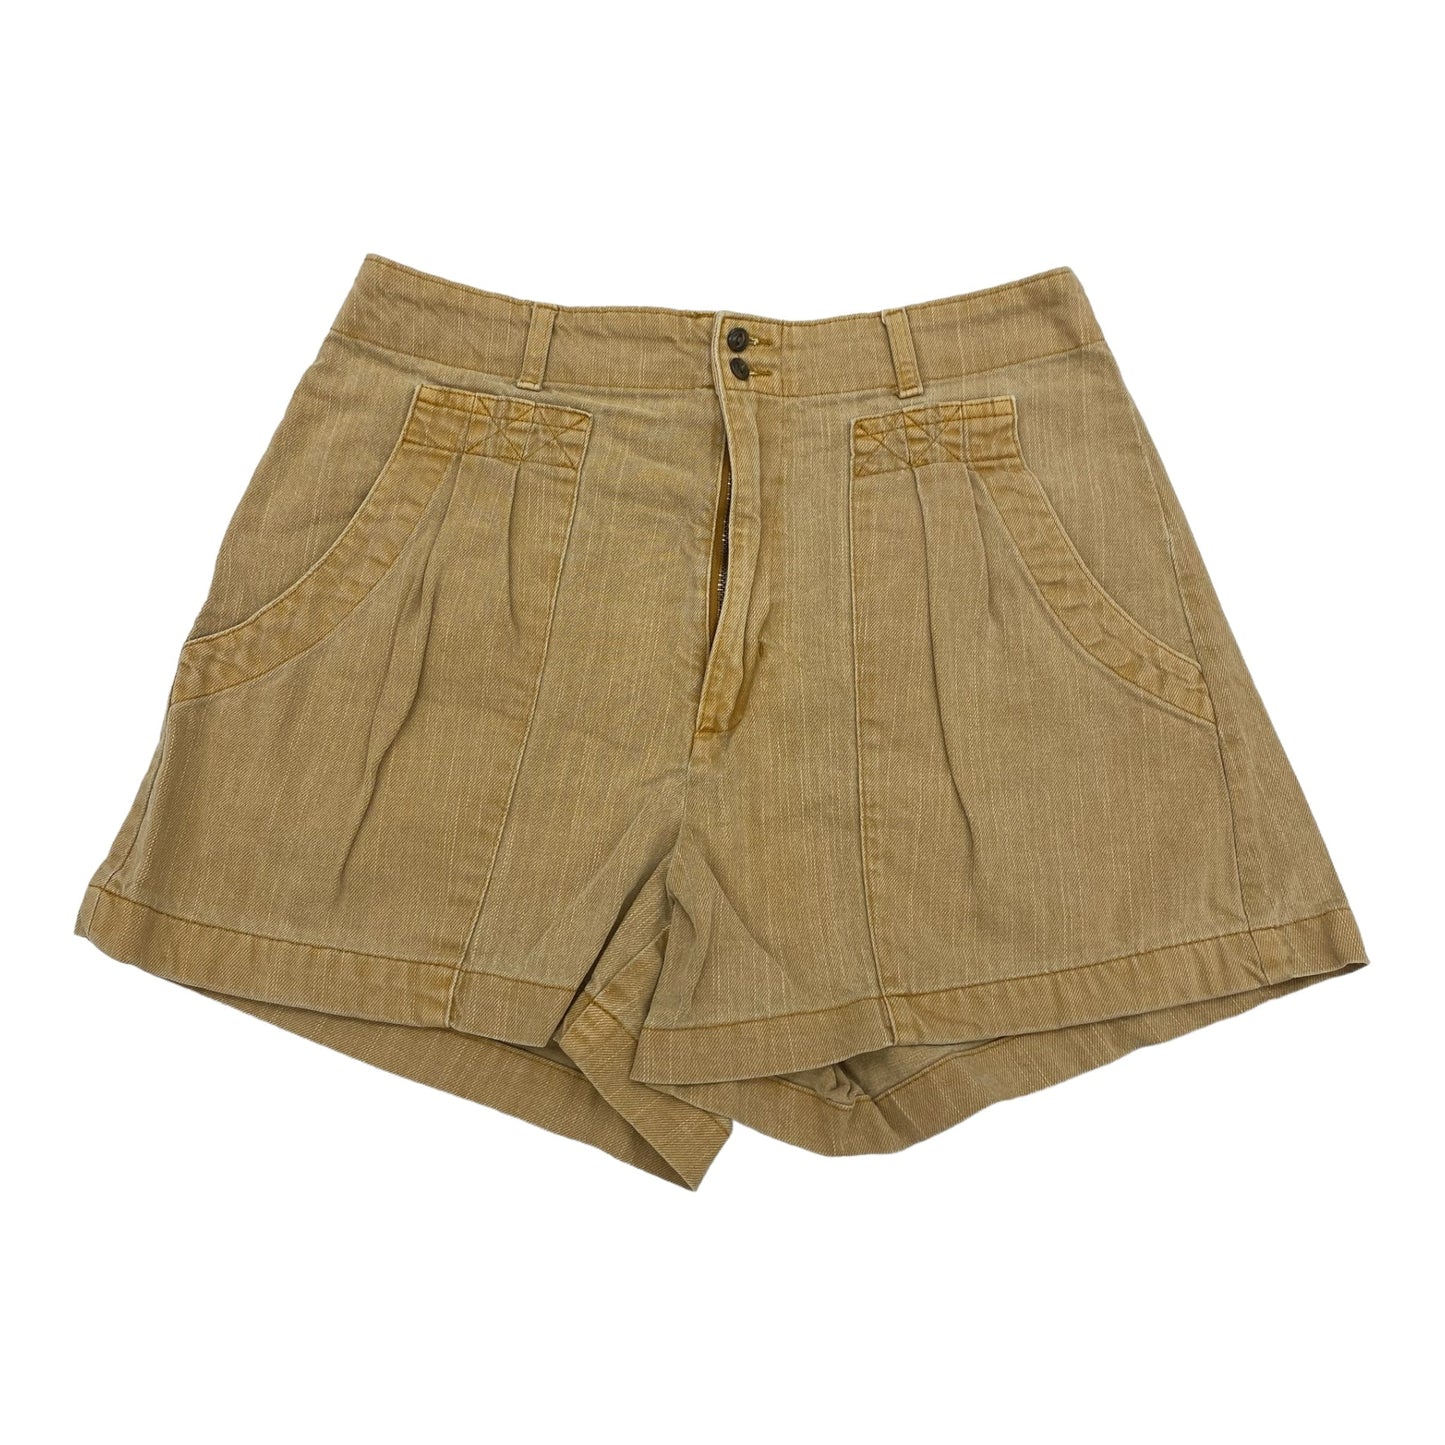 Tan Denim Shorts Universal Thread, Size 6